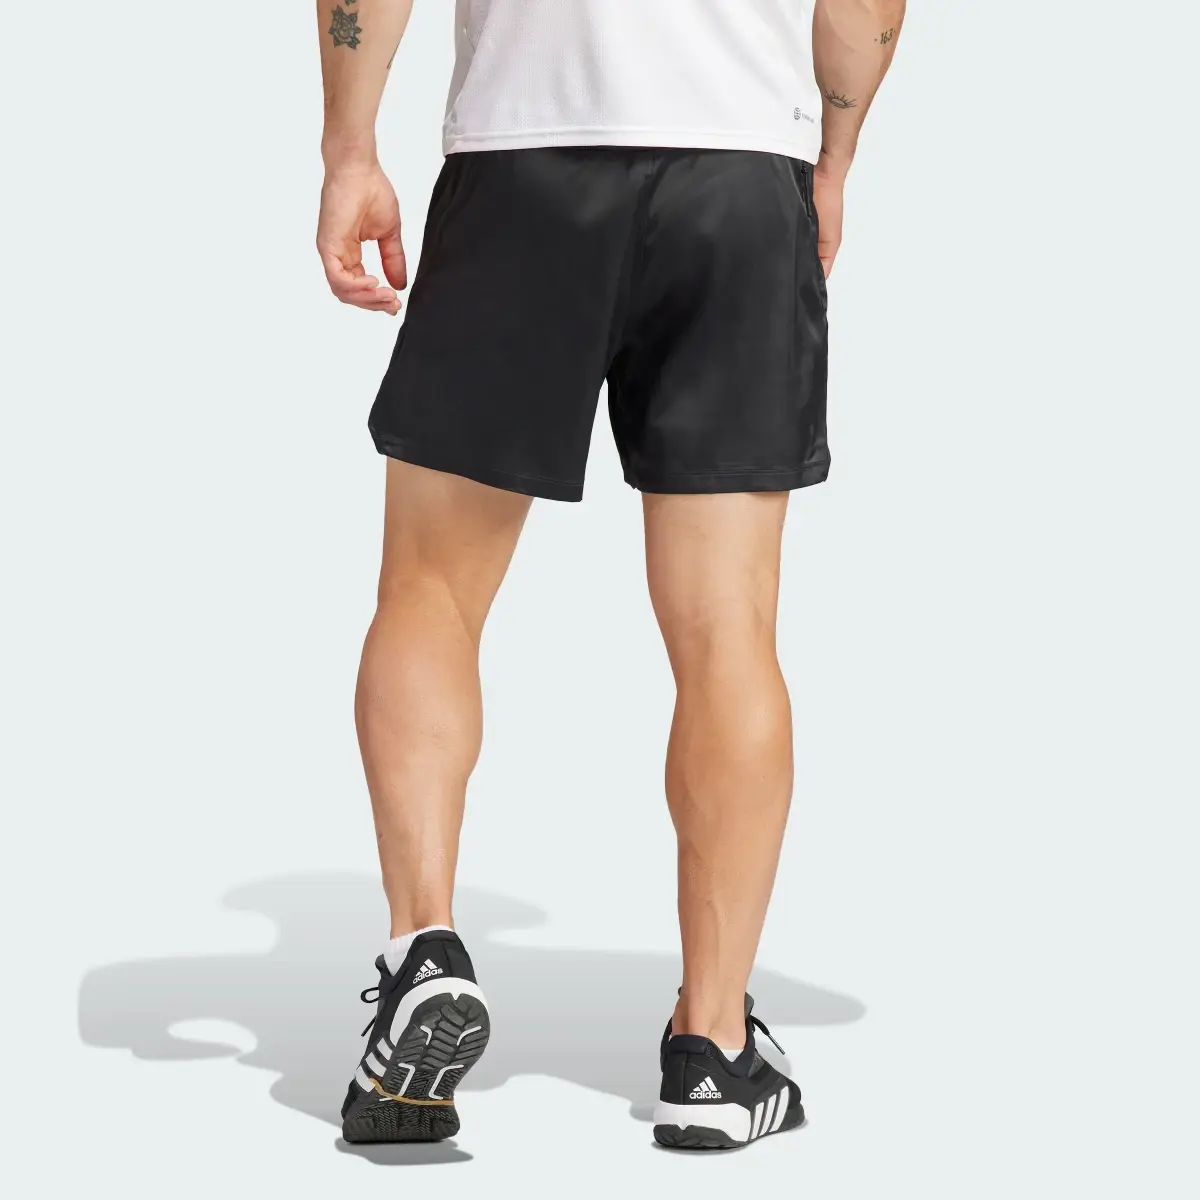 Adidas Power Workout Shorts. 3